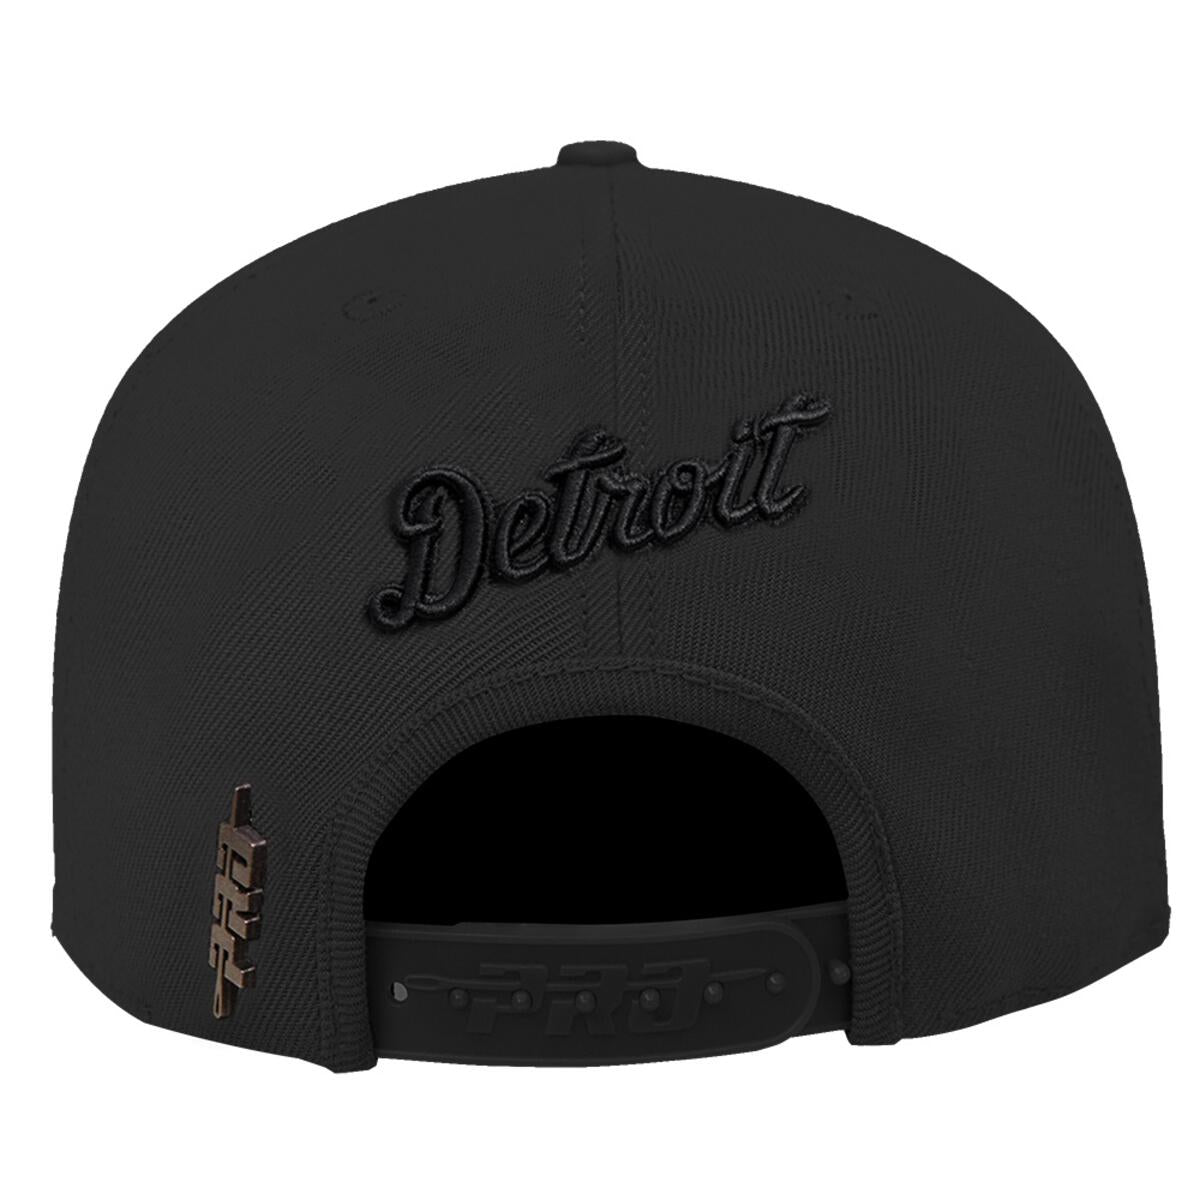 New Era Detroit Tigers MLB Black & Yellow 9FIFTY Snapback Hat